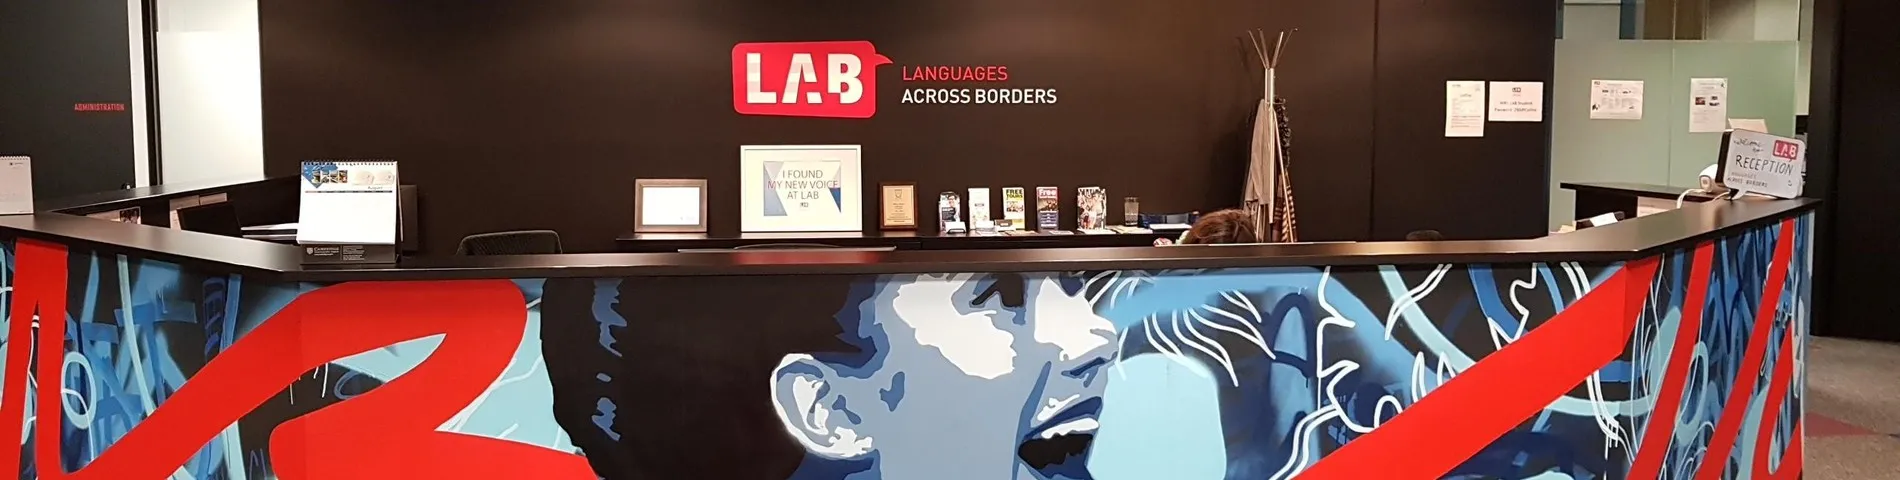 LAB - Languages Across Borders 사진 1